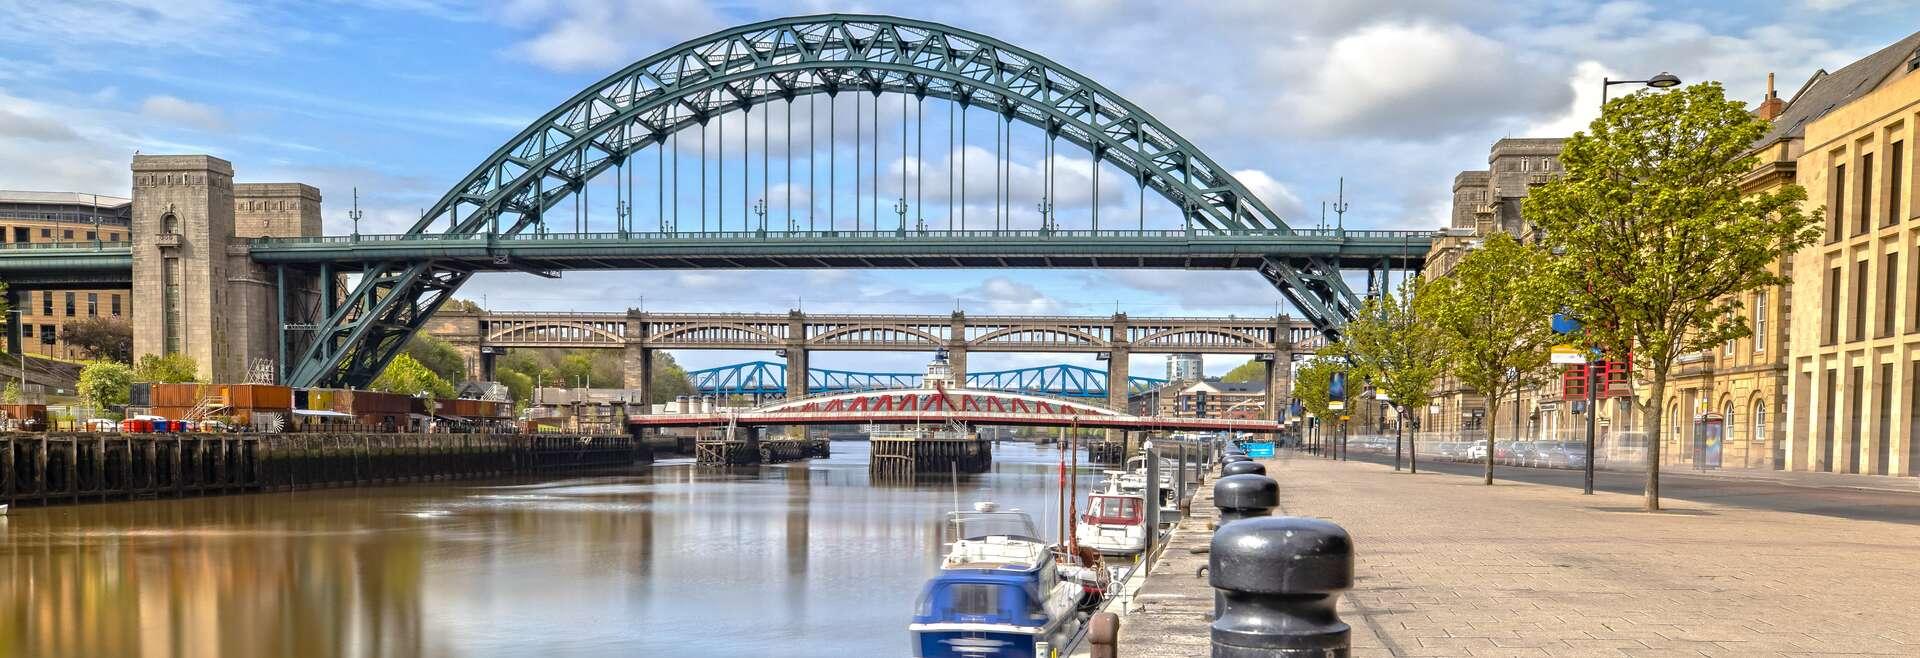 Séjour linguistique Angleterre, Newcastle upon tyne - ponts